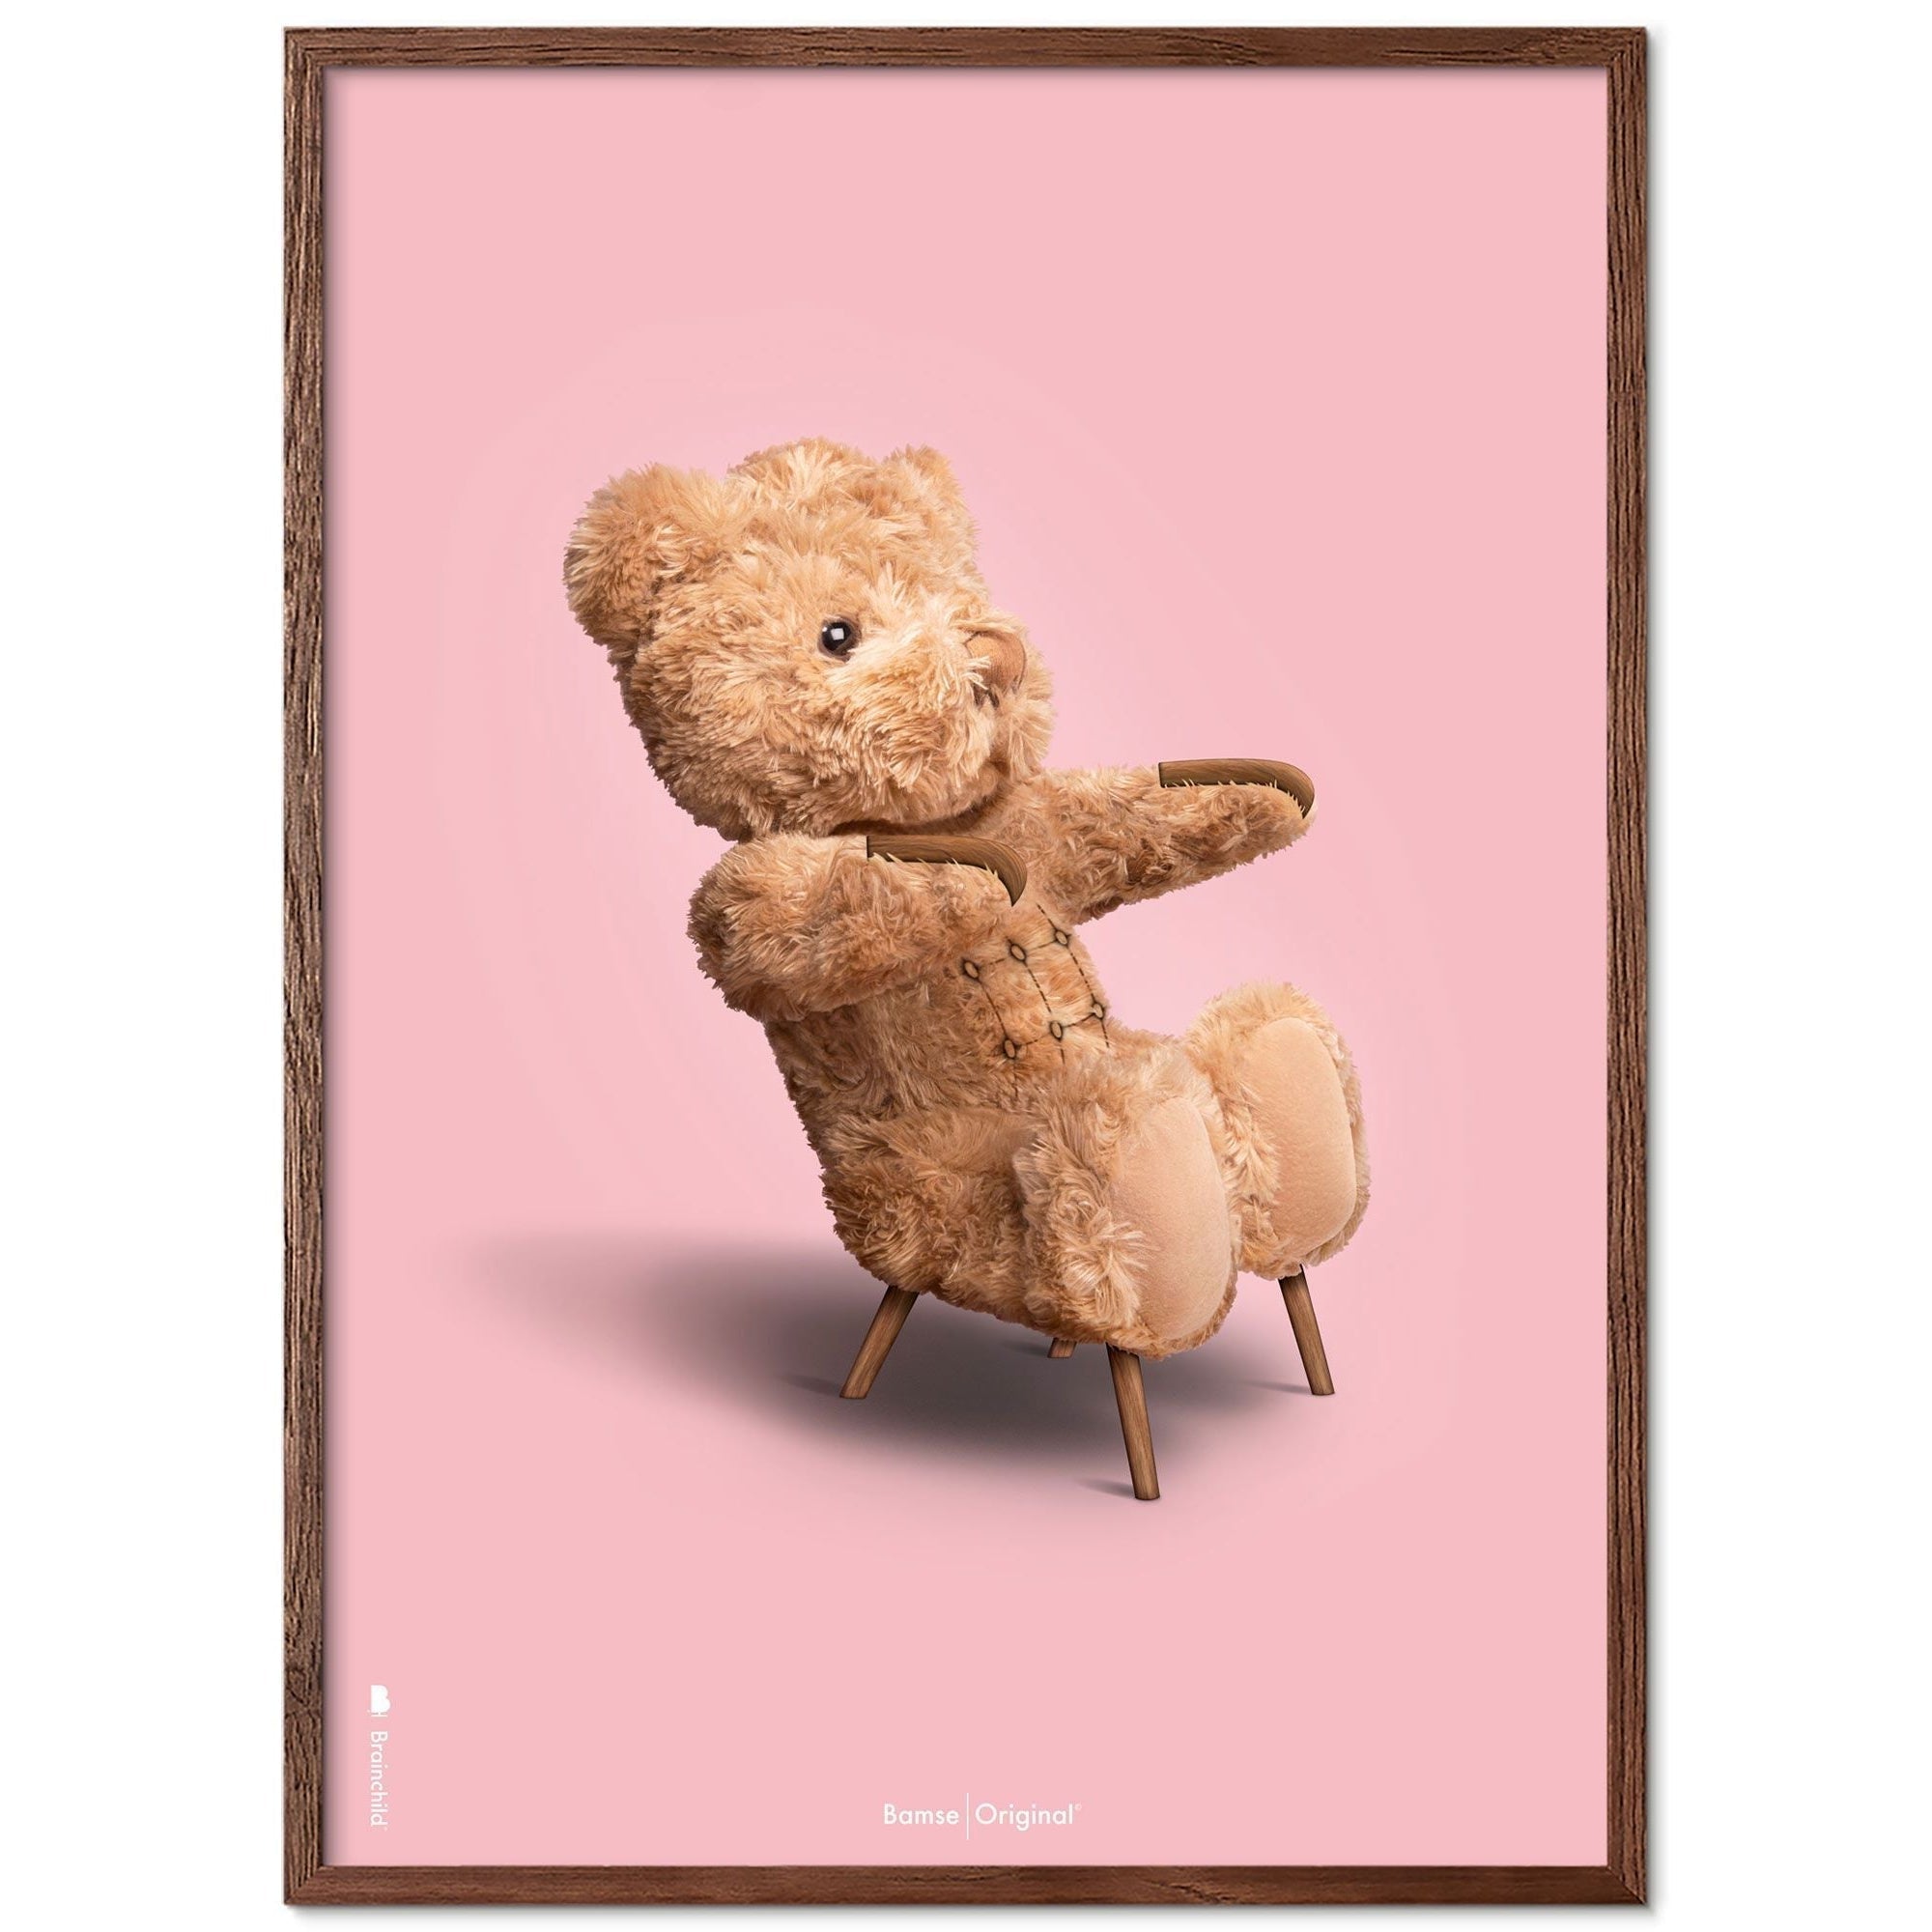 Brainchild Teddy Bear Classic Poster Frame Made Of Dark Wood Ram 70x100 Cm, Pink Background